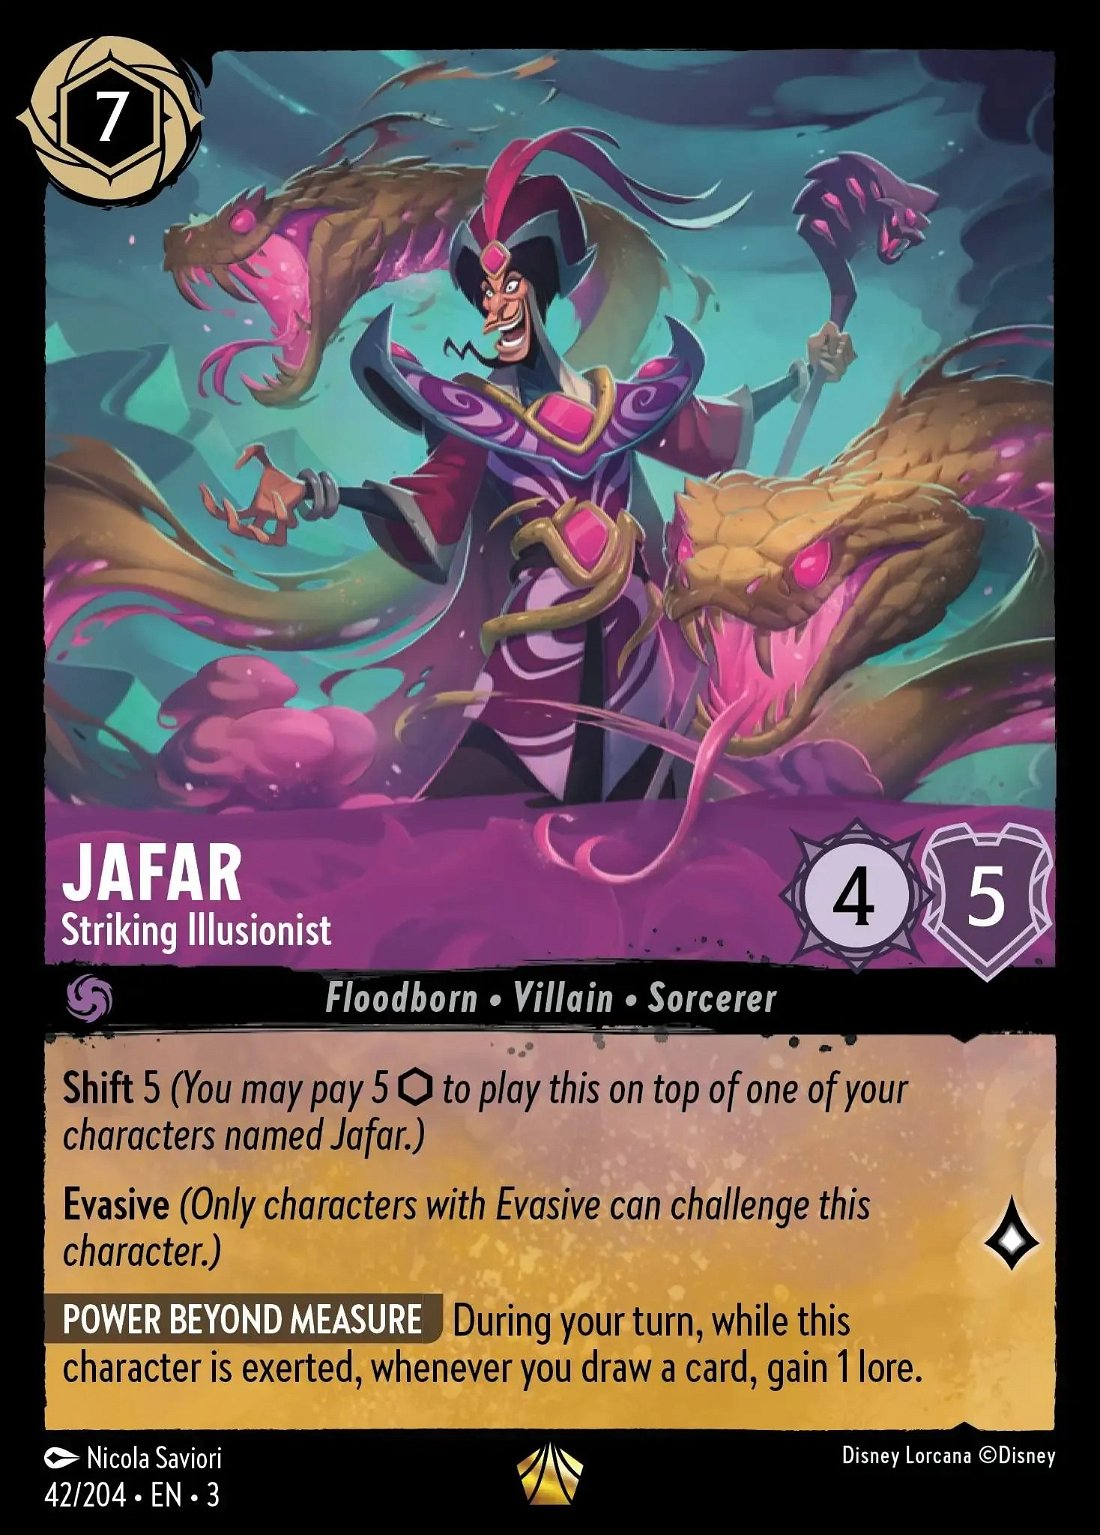 Jafar - Striking Illusionist Crop image Wallpaper